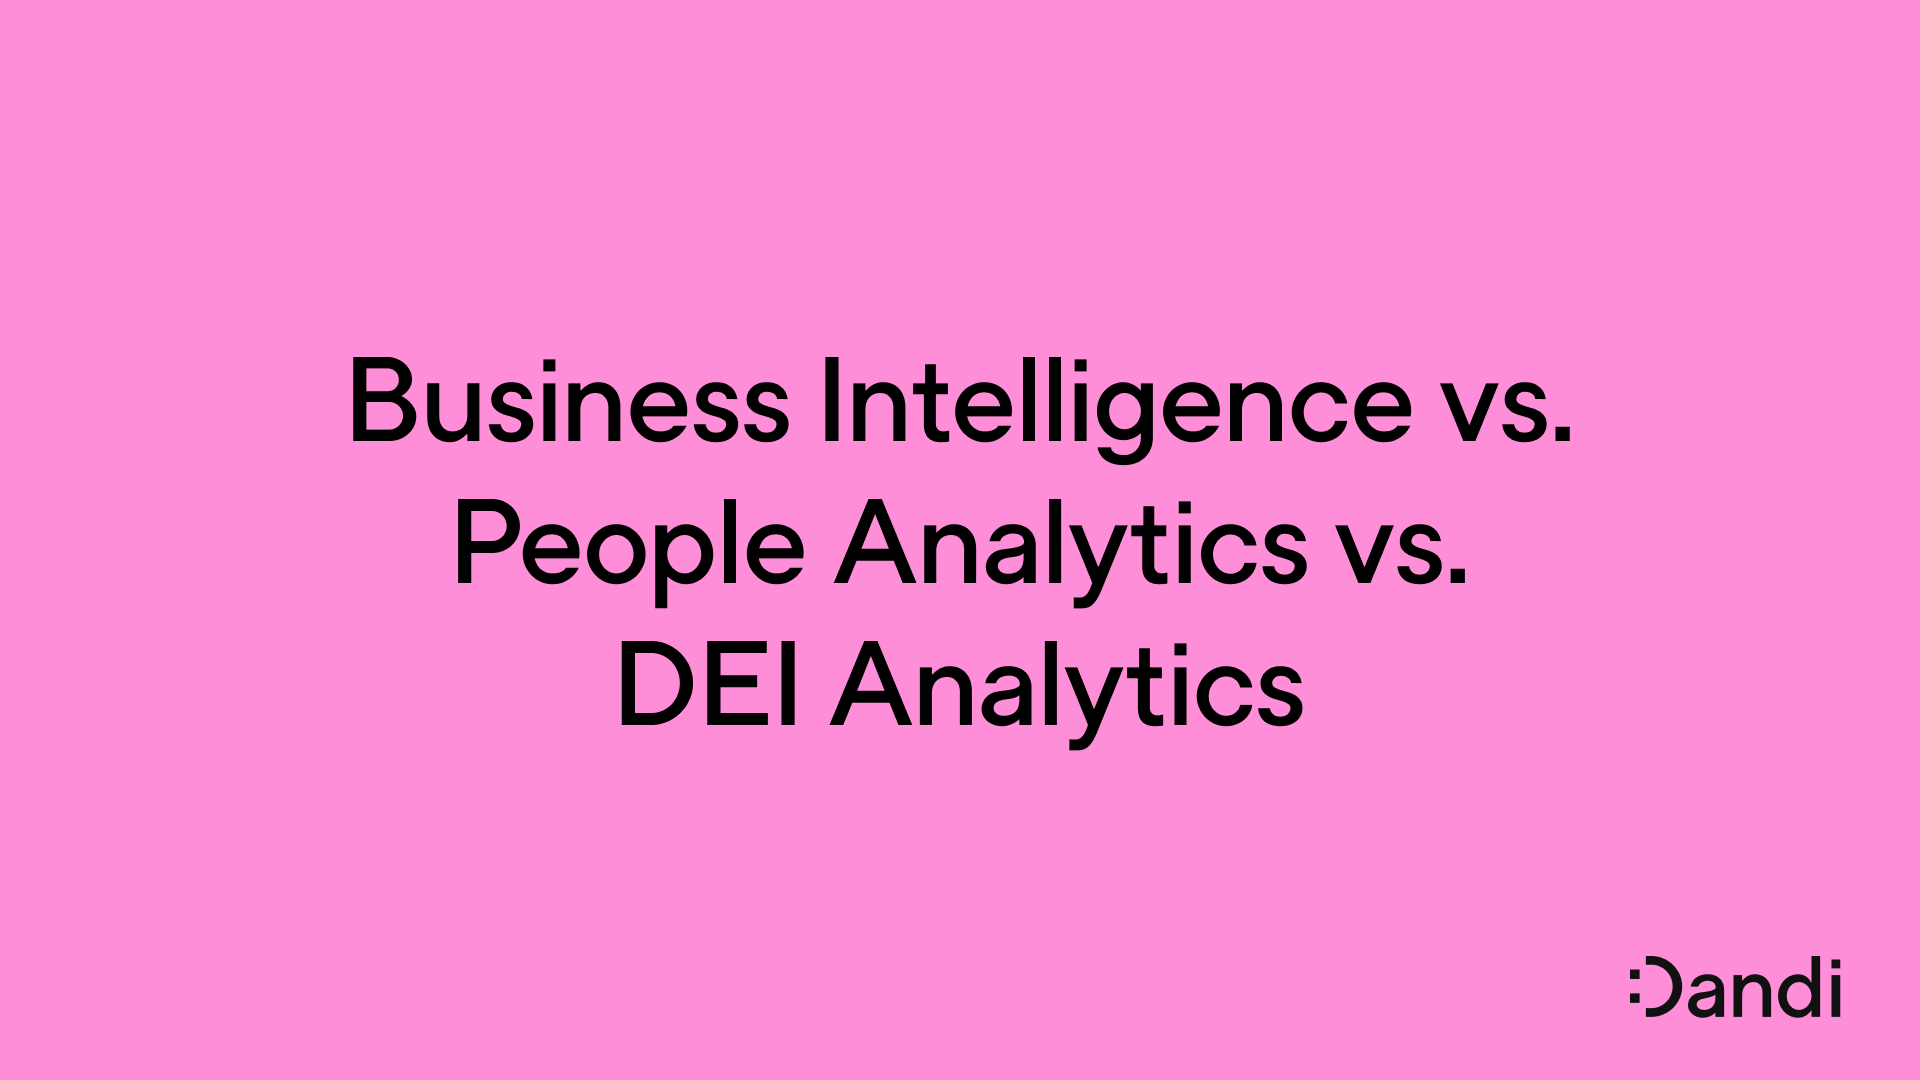 Text reads: Business Intelligence vs. People Analytics vs. DEI Analytics. The Dandi smiley logo is in the bottom right corner.